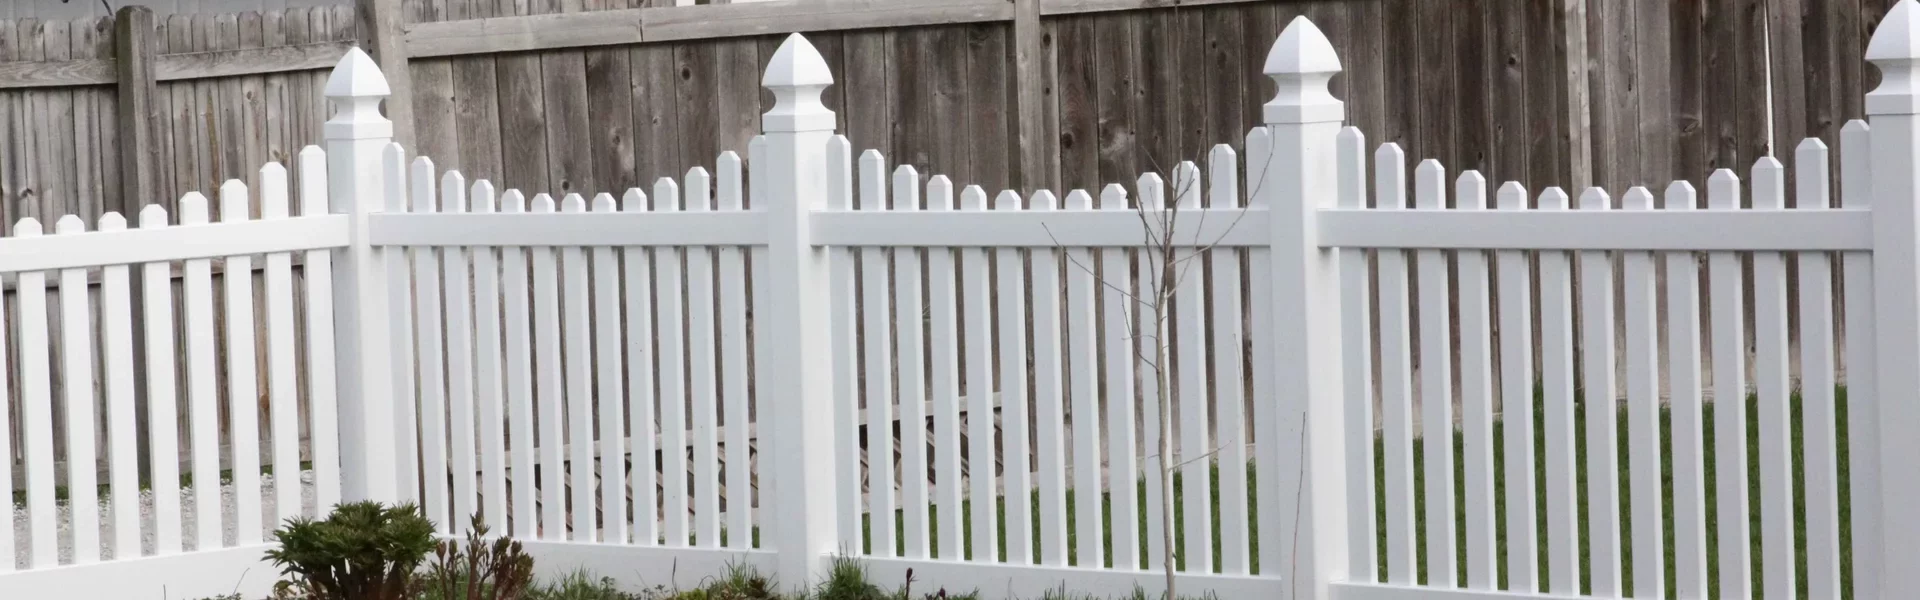 white vinyl fence wrapped around yard